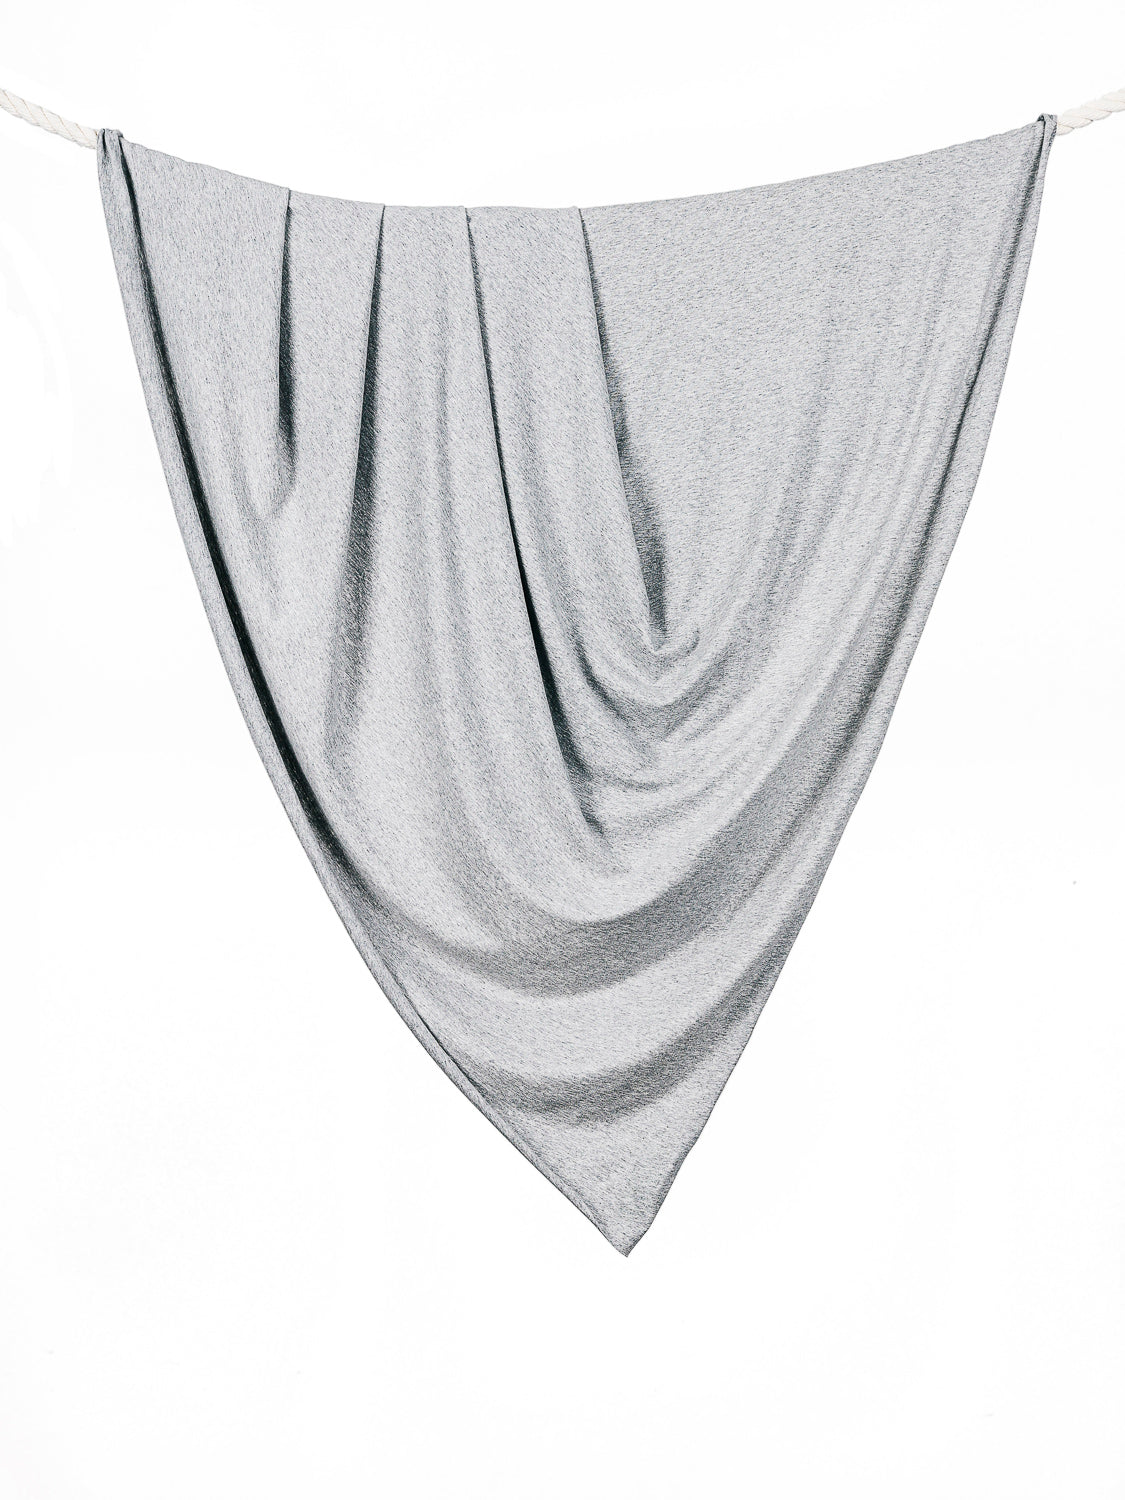 Heather Grey 10 Ounce Cotton/Spandex Jersey Knit Fabric - SKU 2853C